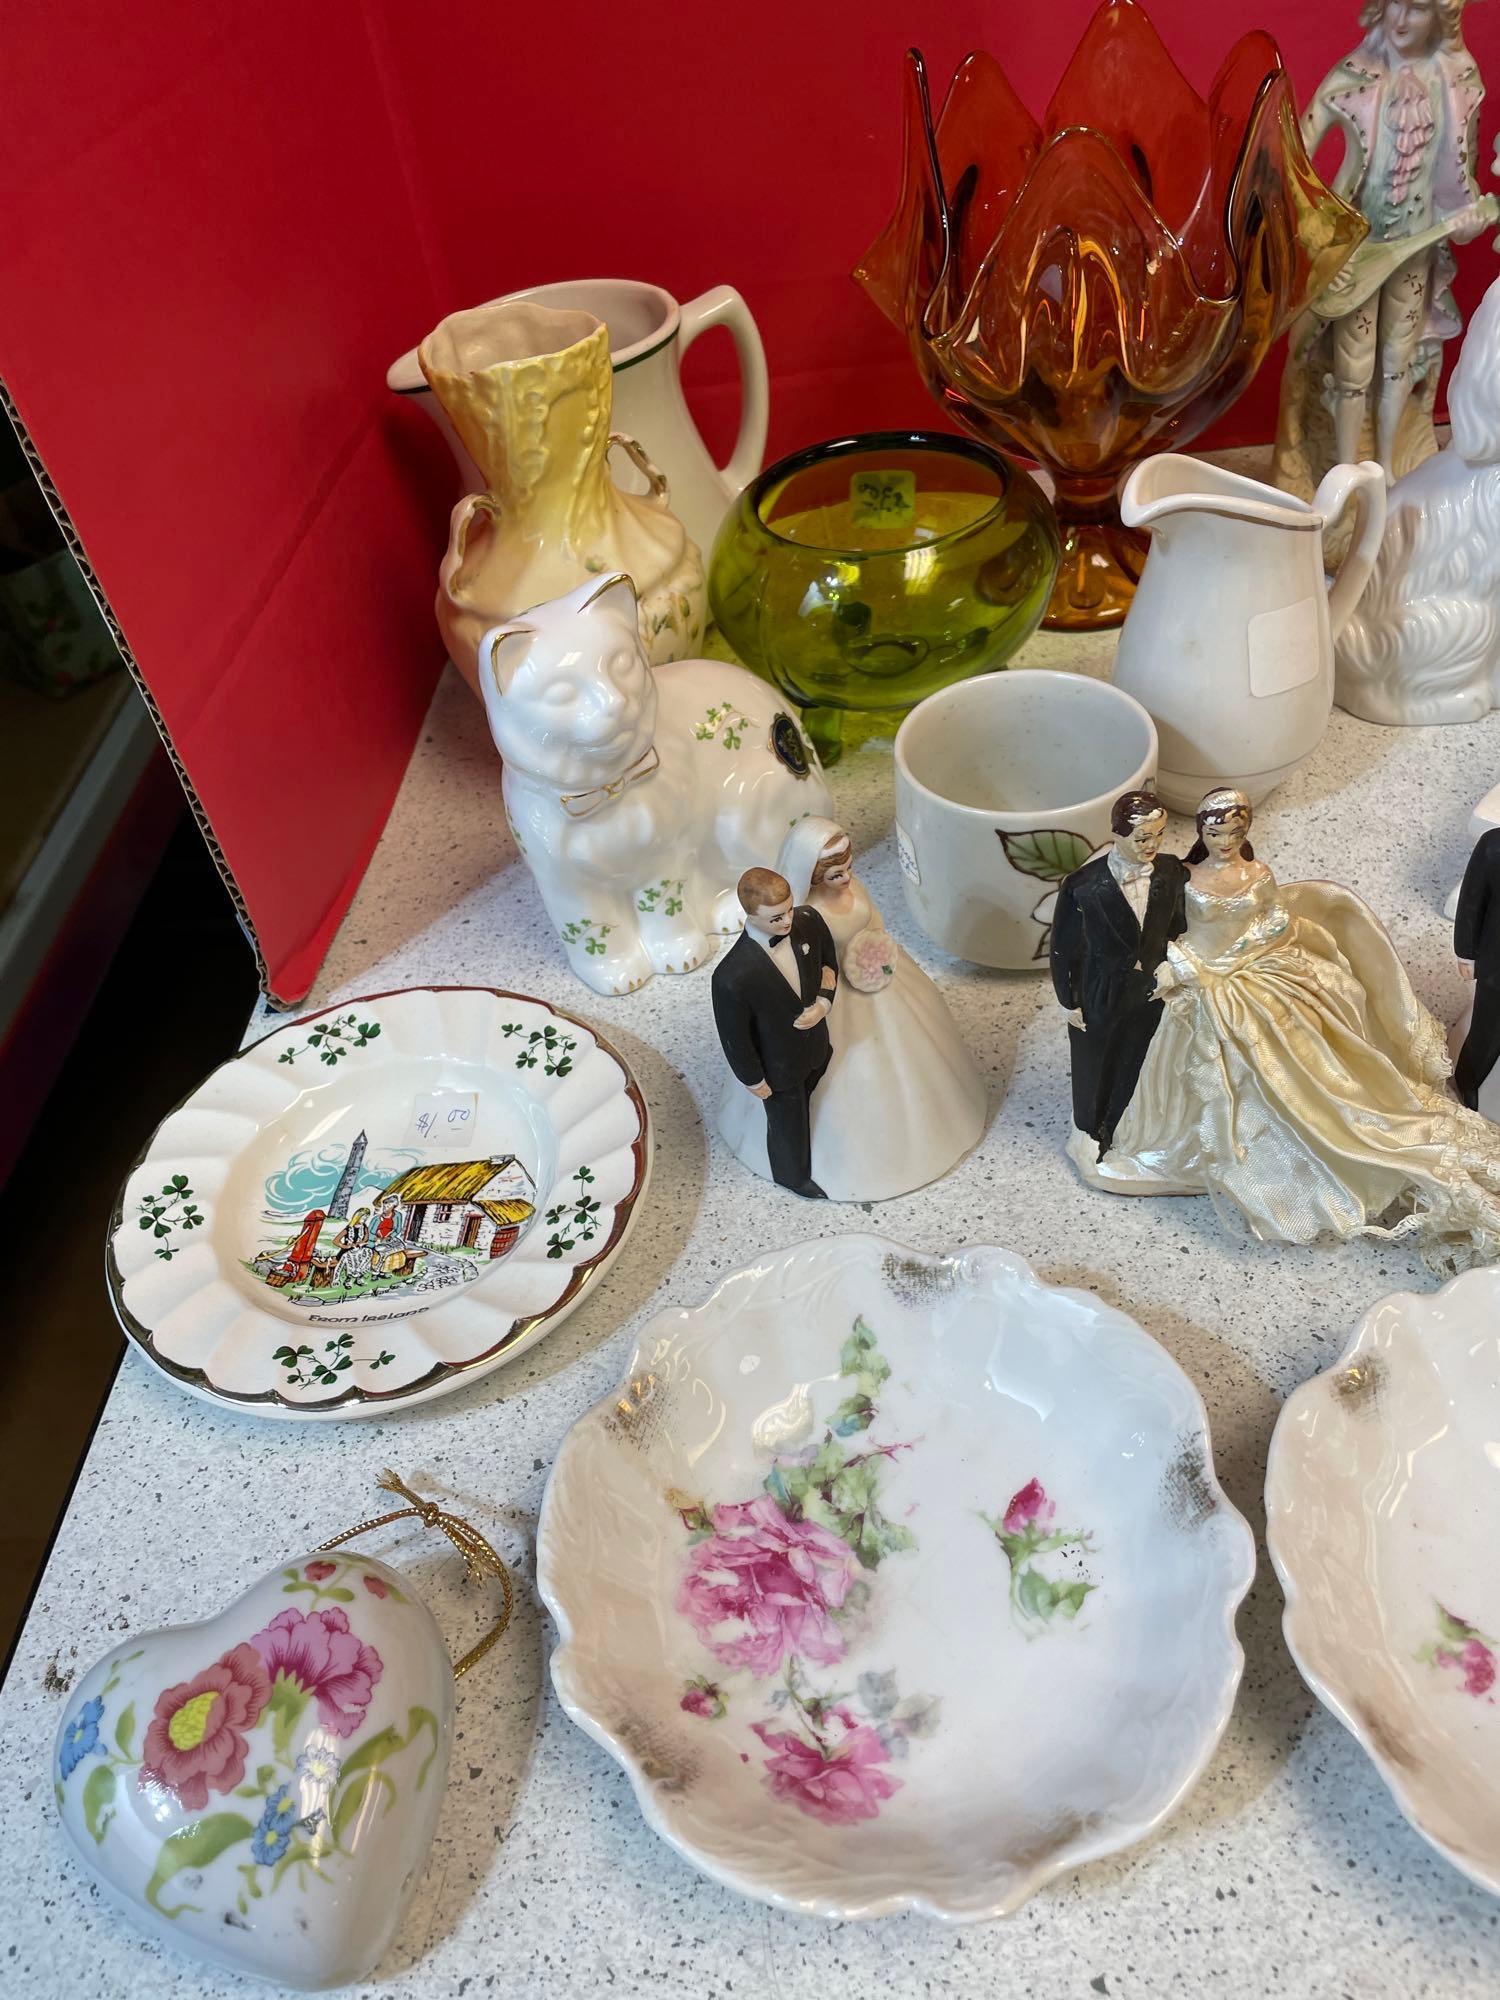 Lefton bride and groom bells, Tara porcelain cat other porcelain and glass pieces